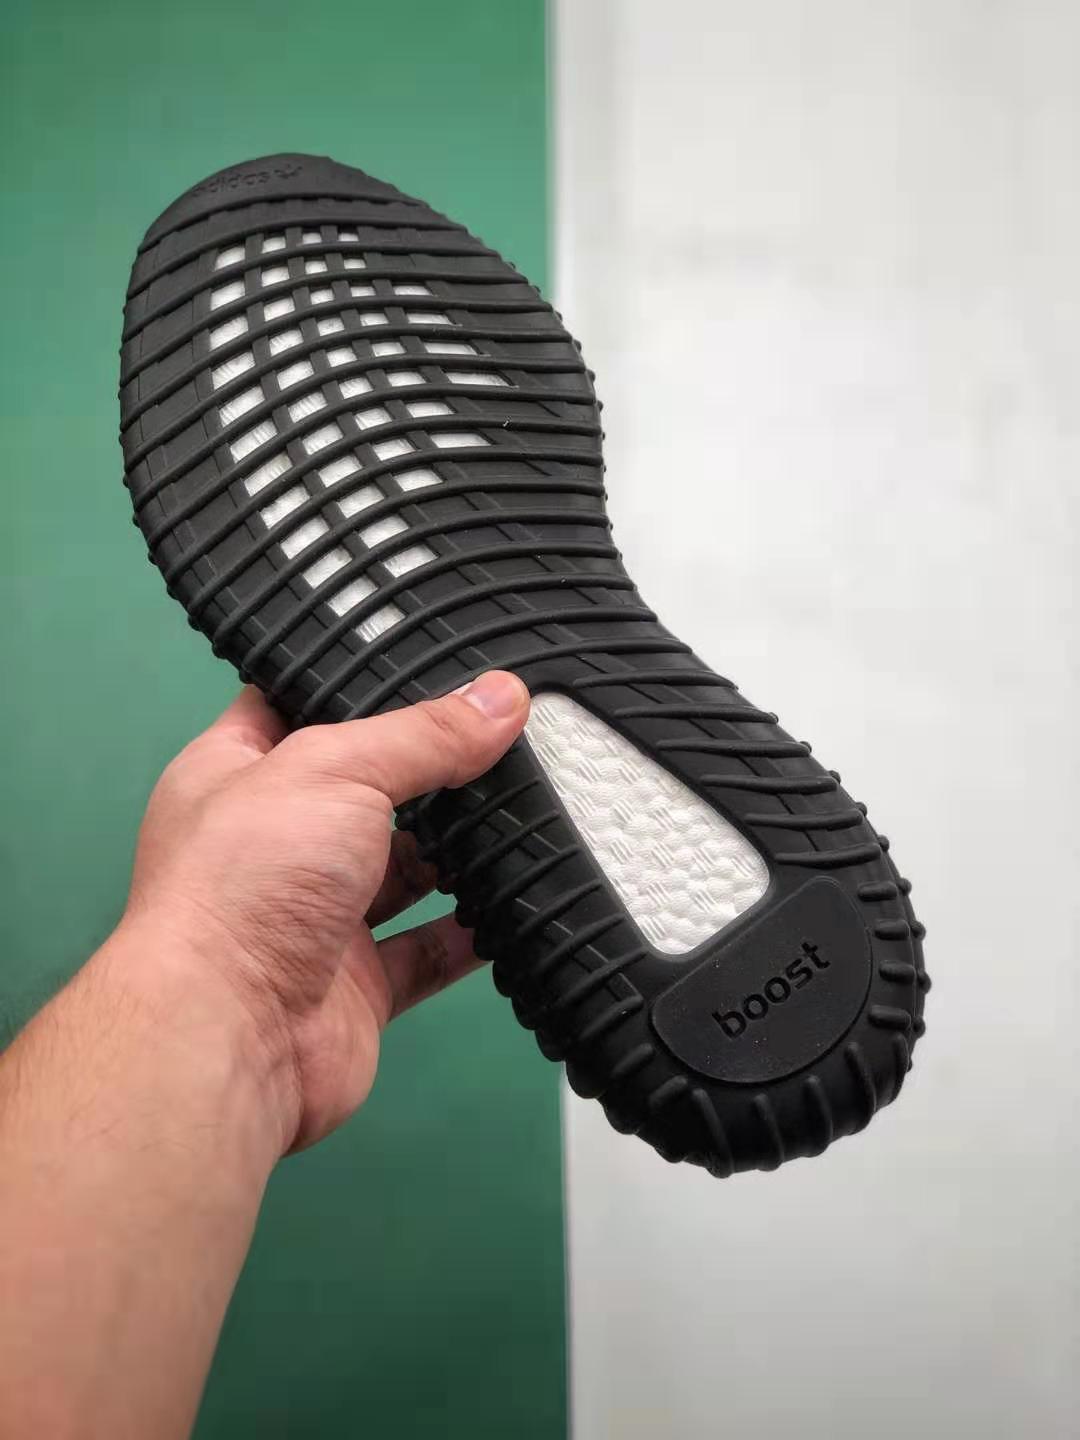 Adidas Yeezy Boost 350 V2 'Yecheil Reflective' FX4145 - Exclusive Sneaker Release